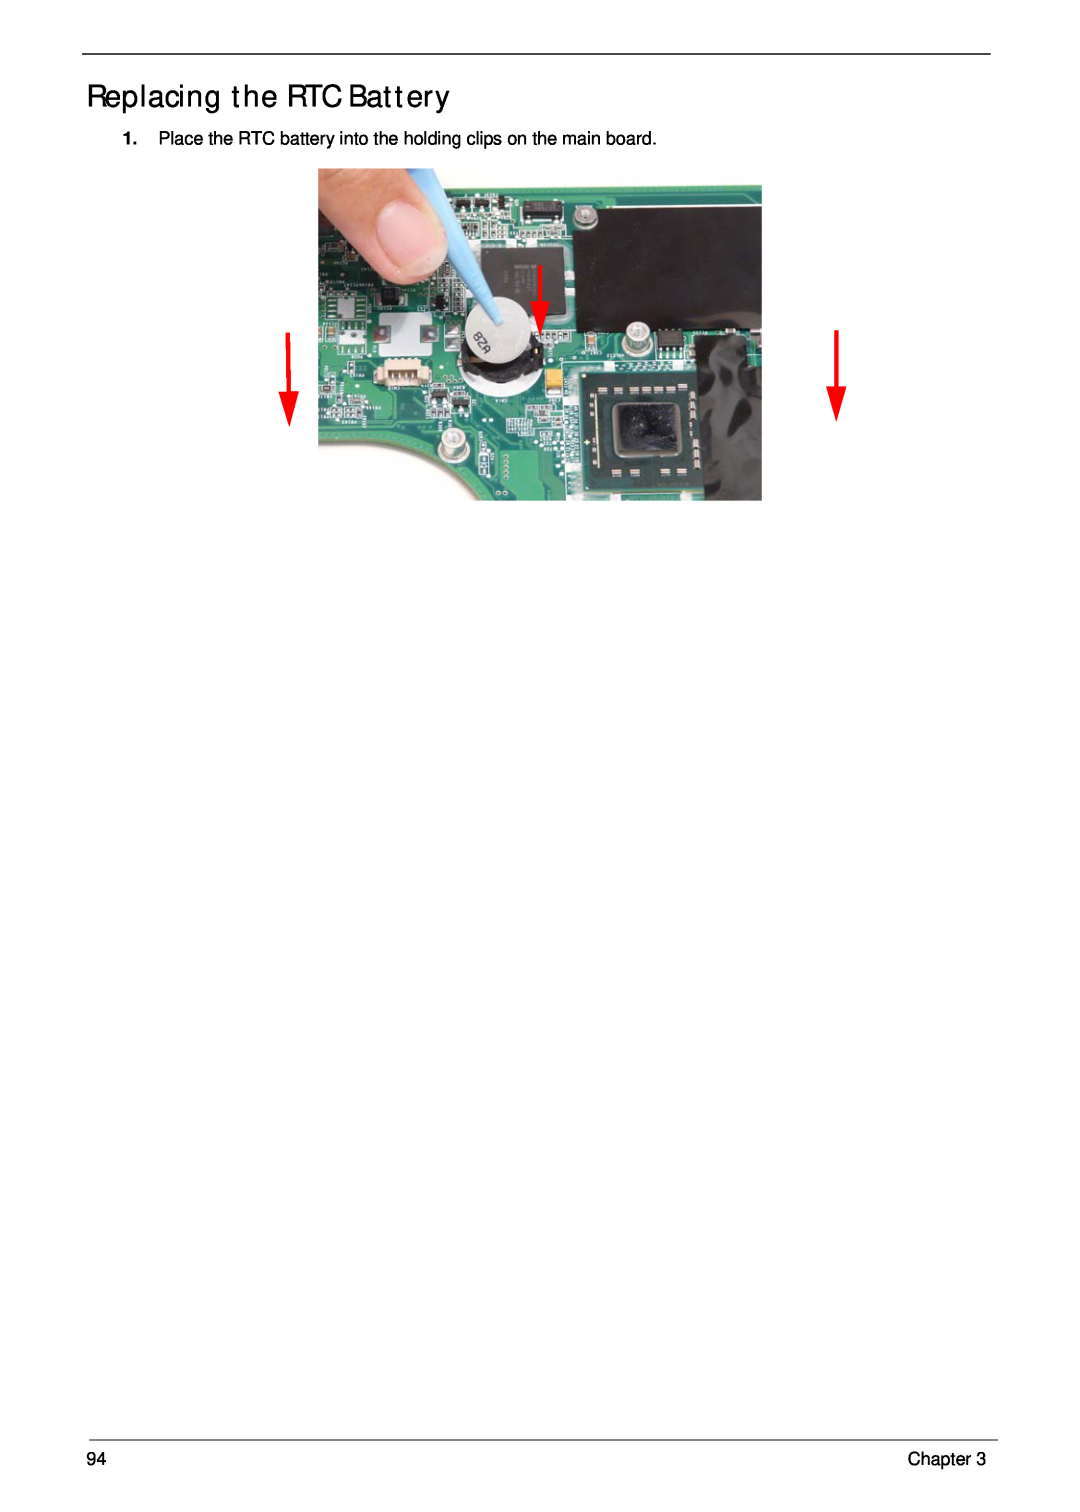 Gateway EC14 manual Replacing the RTC Battery, Place the RTC battery into the holding clips on the main board 